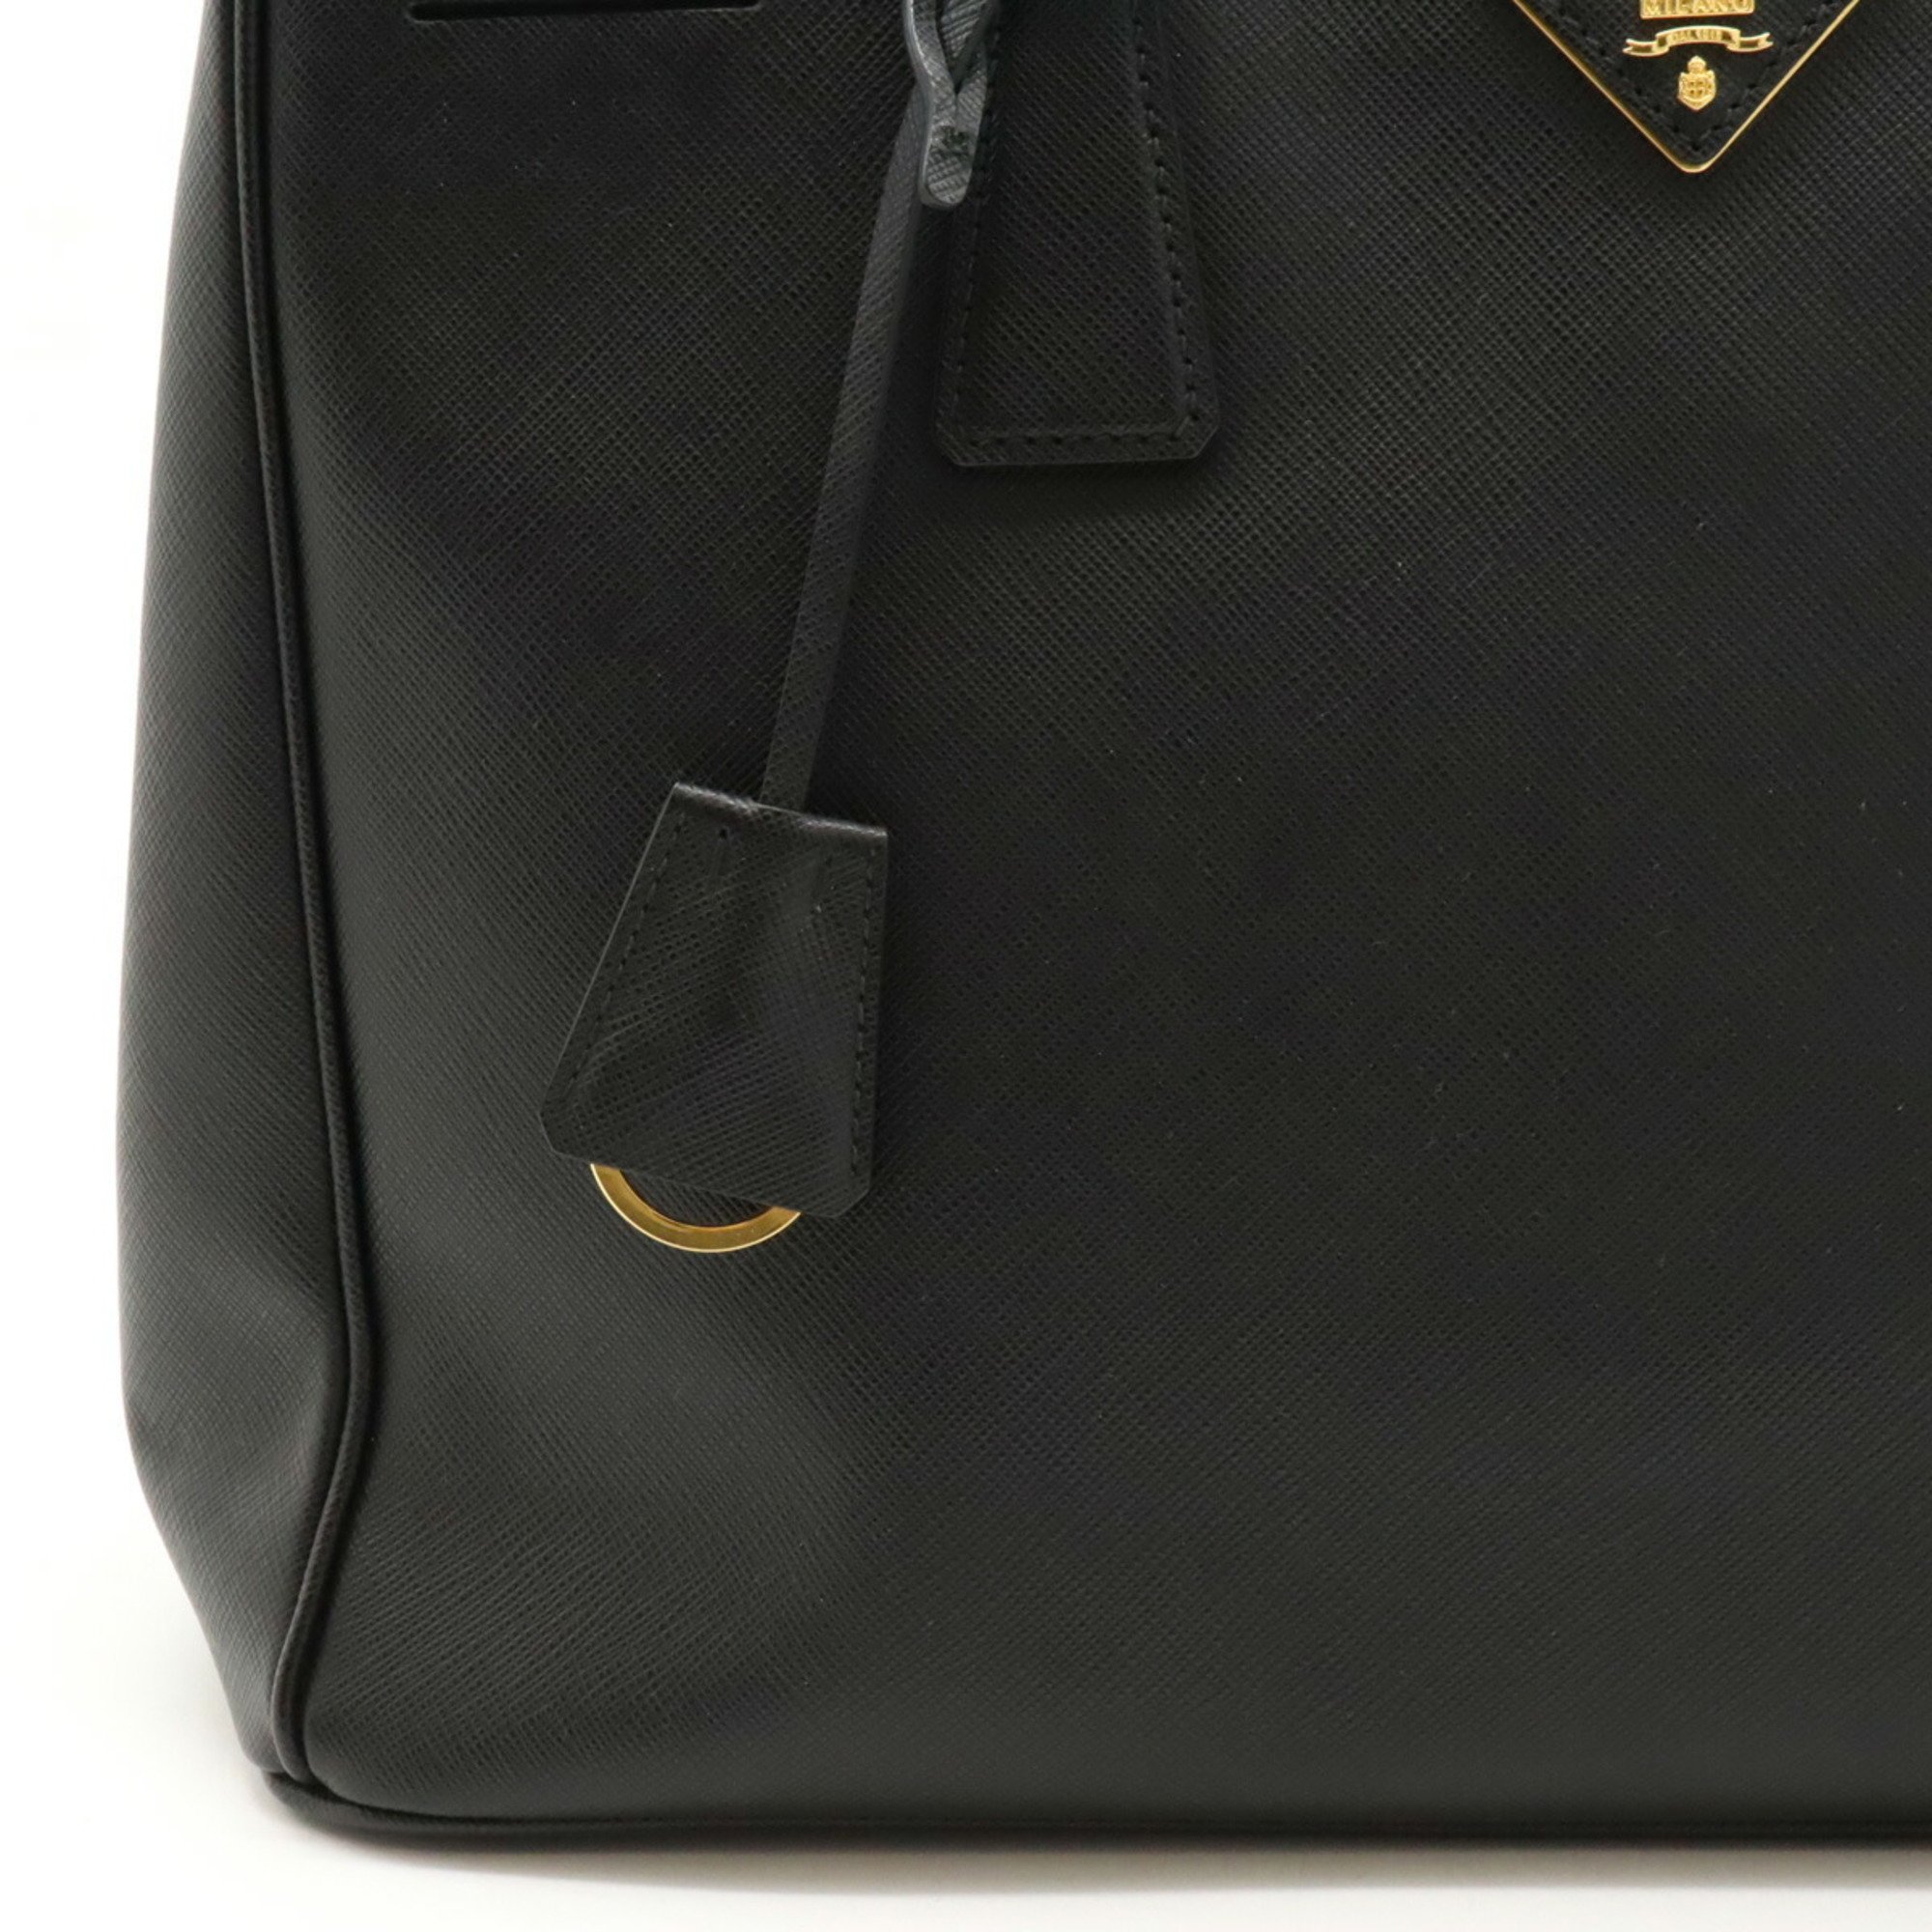 PRADA SAFFIANO LUX Saffiano handbag shoulder bag leather NERO black purchased at overseas boutique BN2274